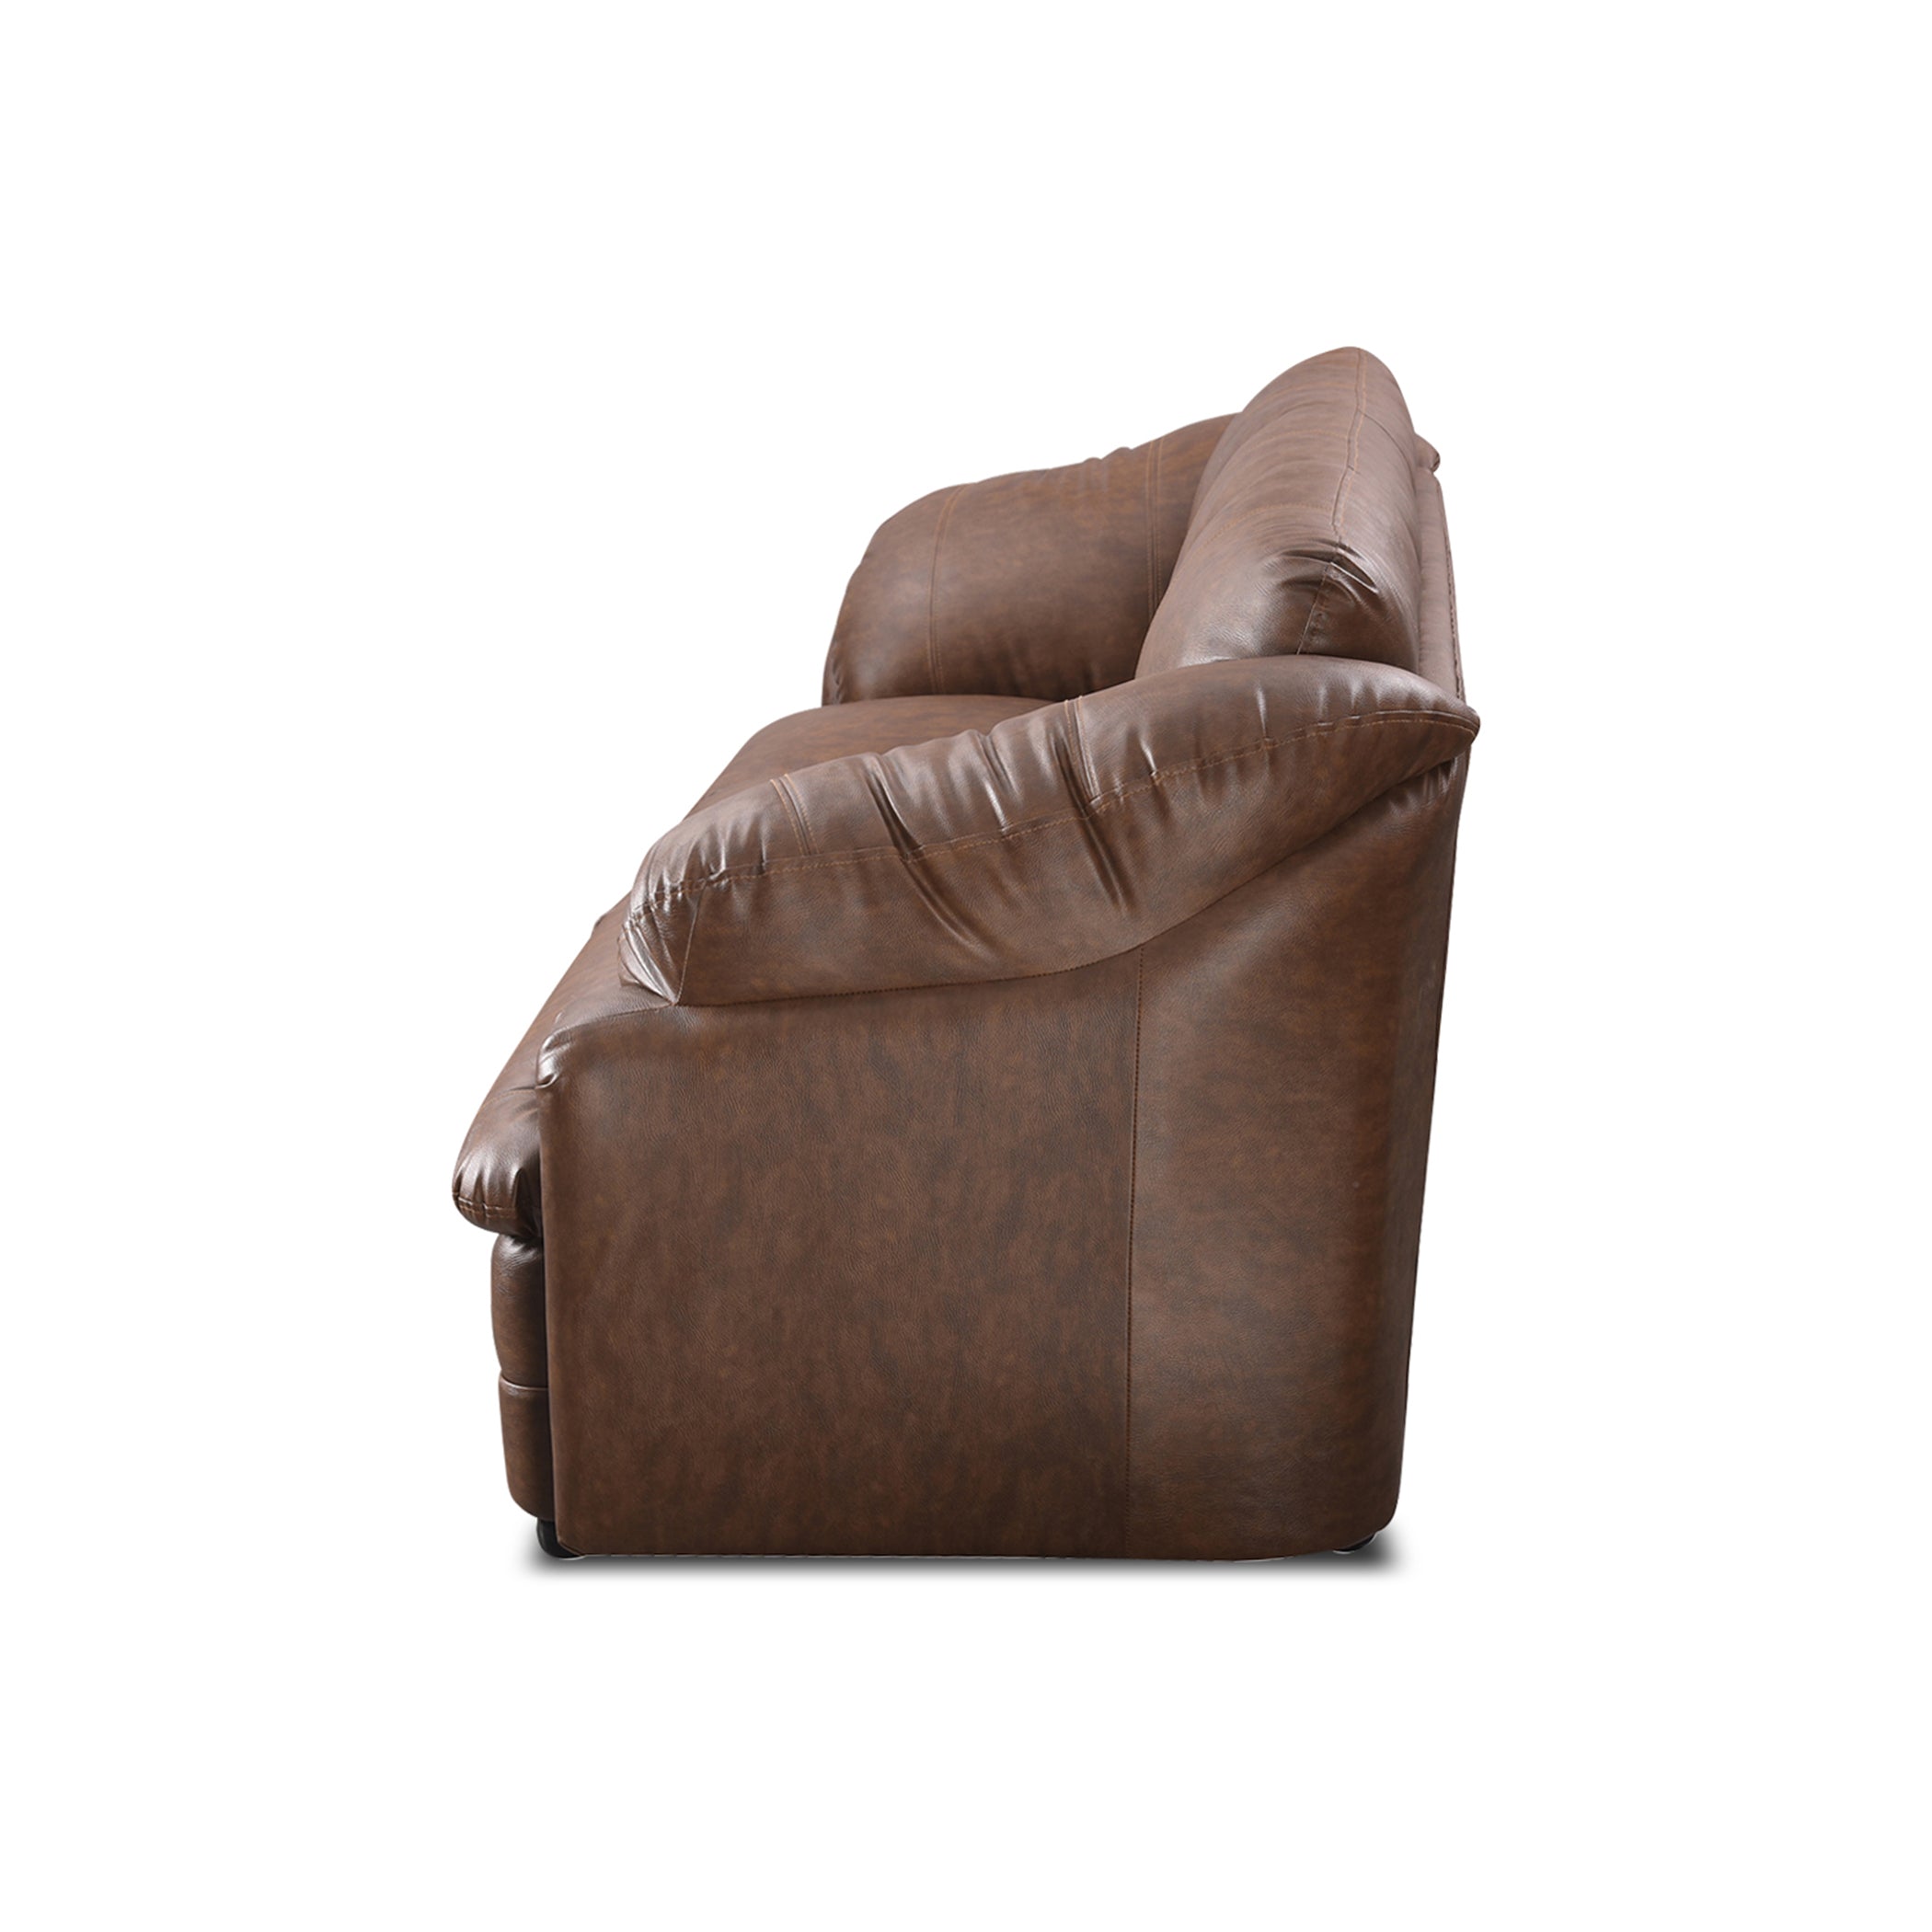 Coppenhagen Brown 1S Sofa by Zorin Zorin